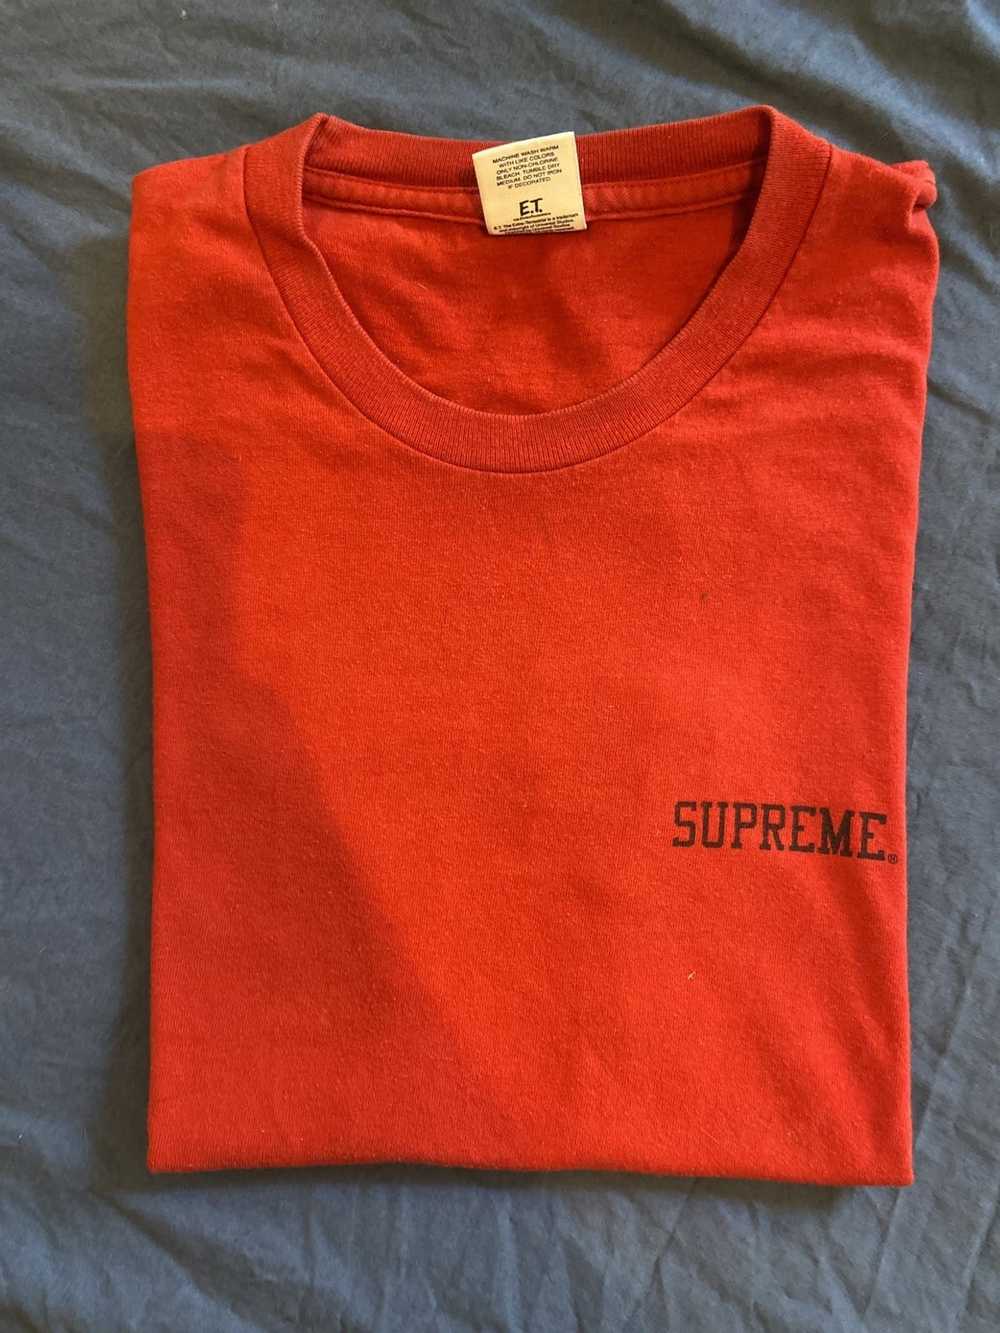 Supreme Supreme ET t-shirt red size S VG conditio… - image 7